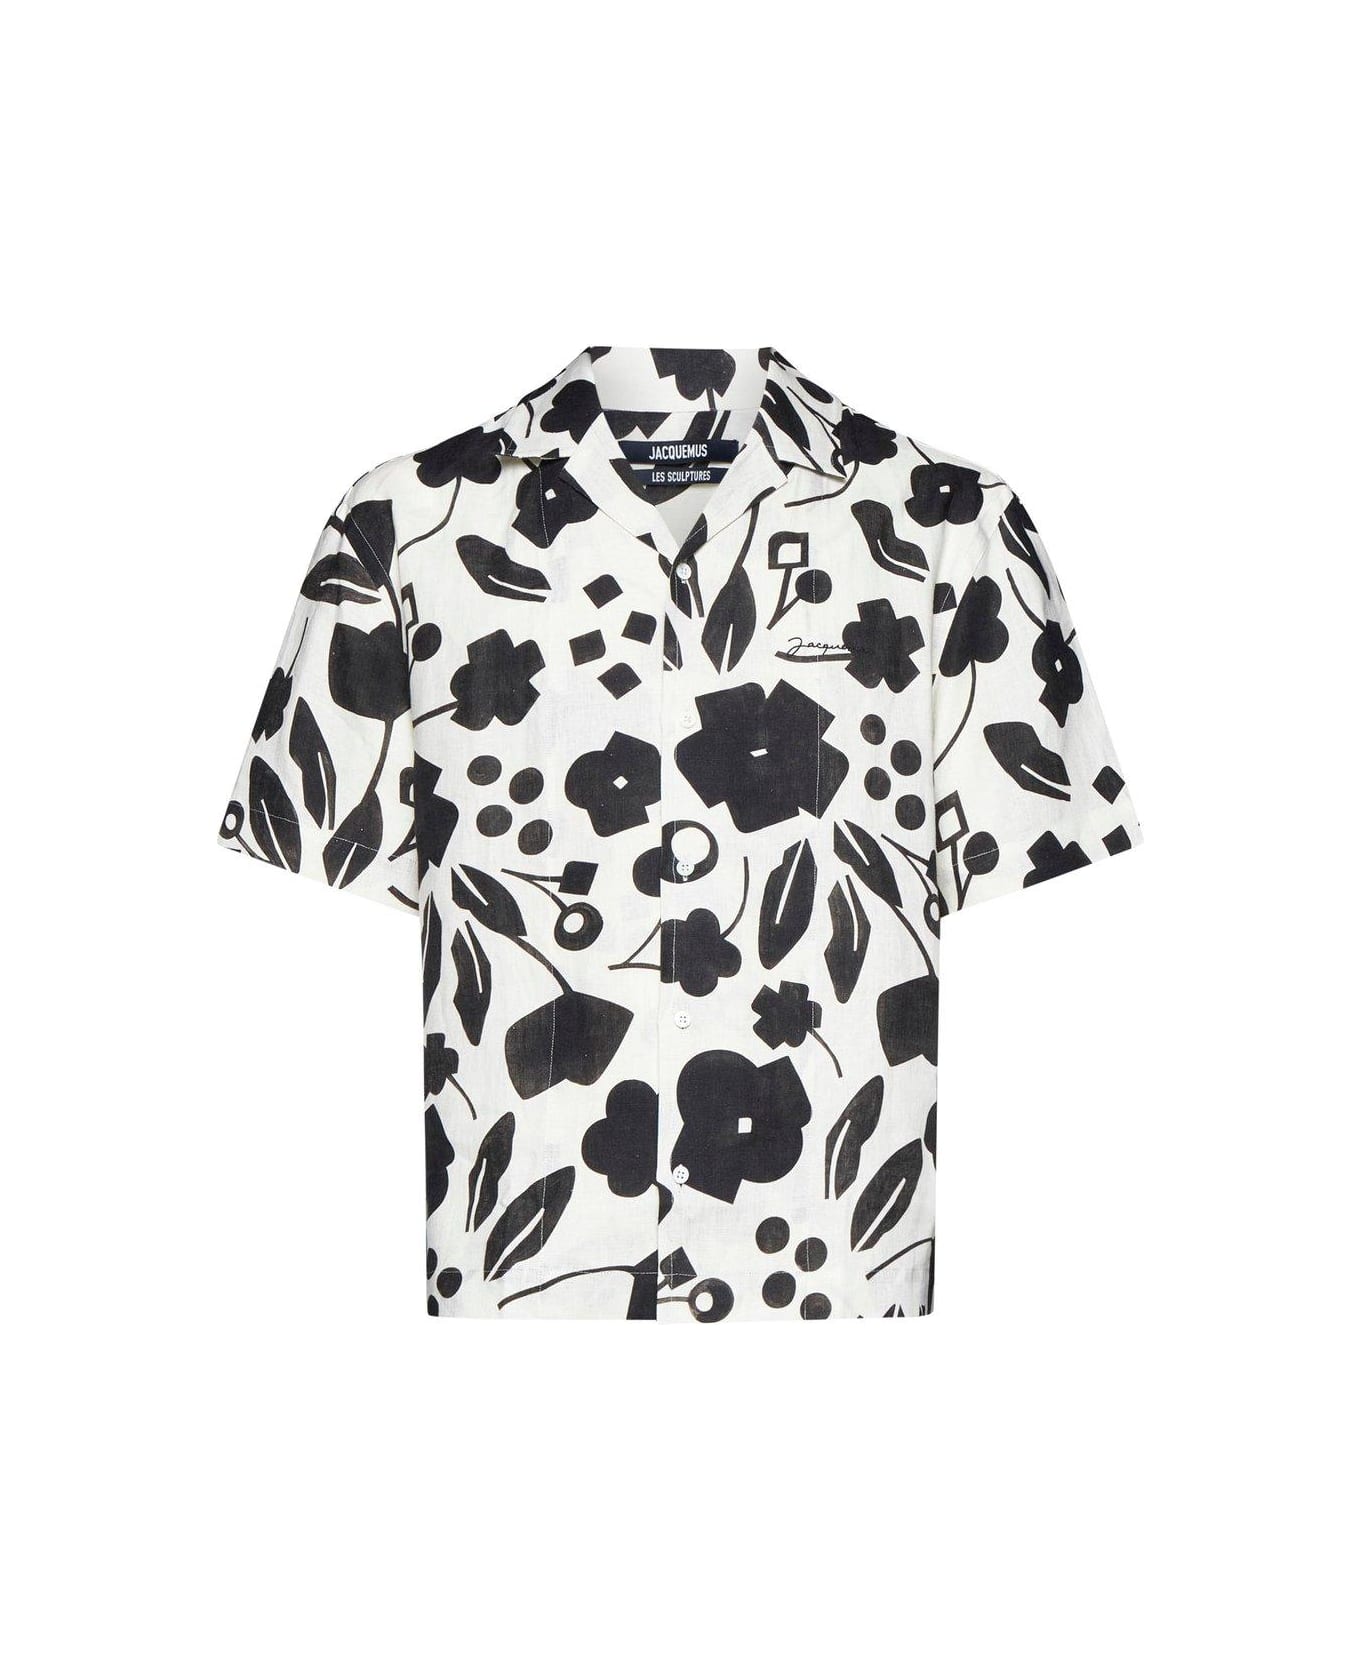 Jacquemus Shirt - Hc Pt Black White Cubic Flow シャツ